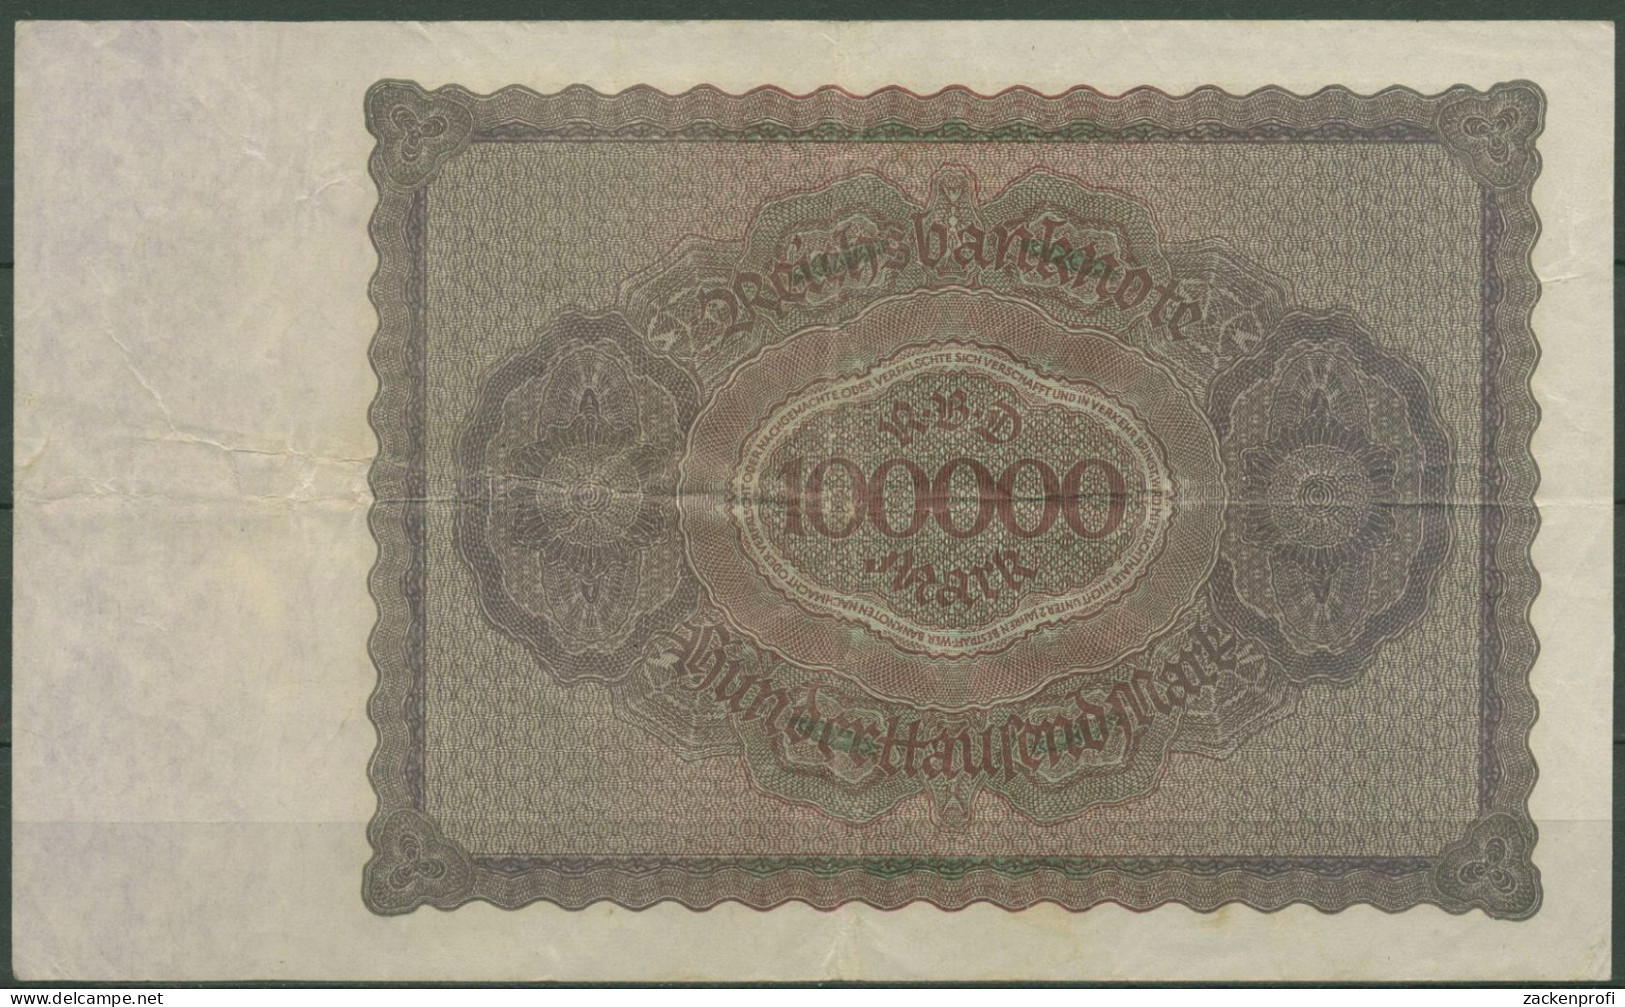 Dt. Reich 100000 Mark 1923, DEU-93a Serie F, Gebraucht (K1387) - 100.000 Mark